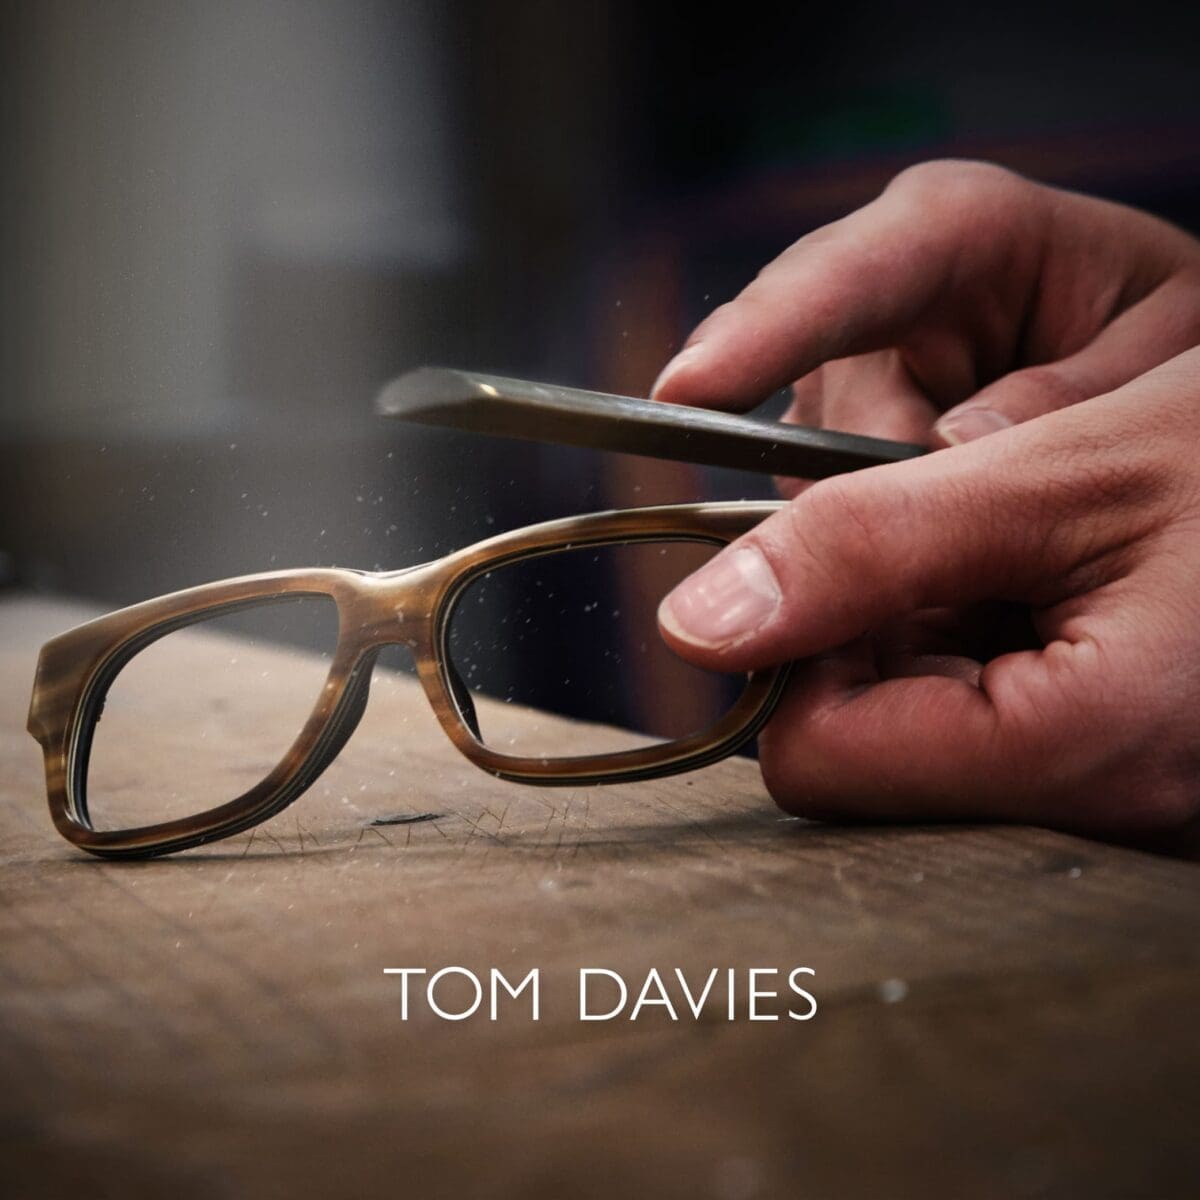 Tom Davies handgemaakte brillen